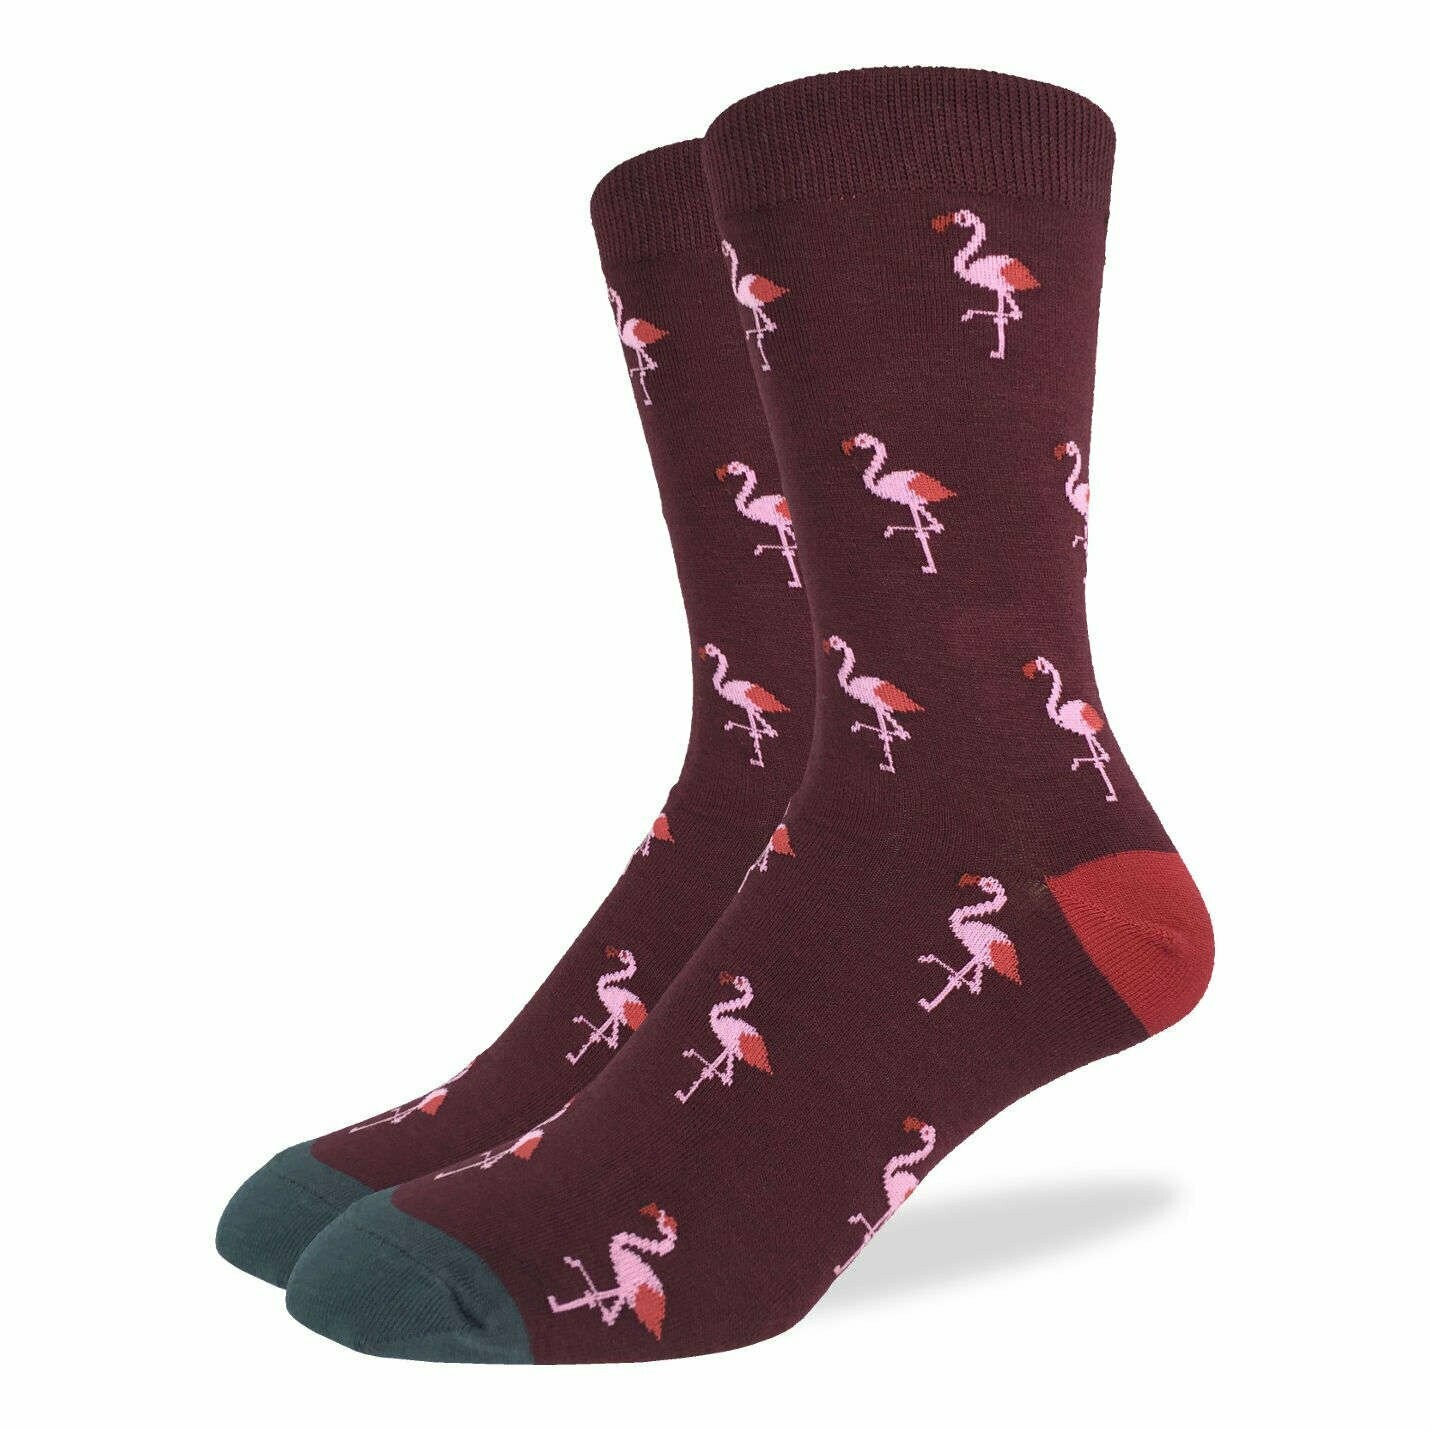 Flamingo Party socks | M/L/XL adult sizes | Good Luck Sock